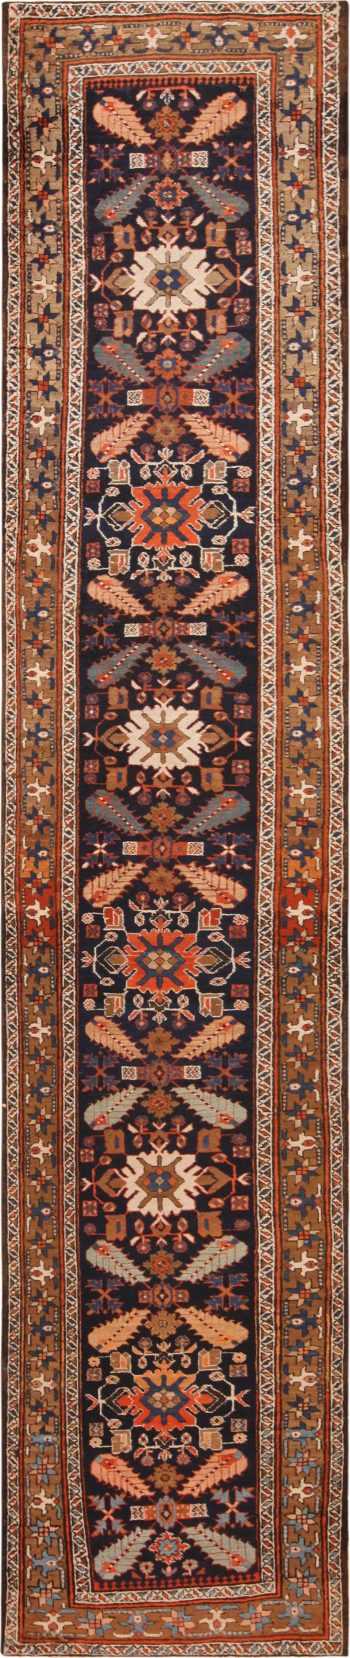 Antique Persian Heriz Runner 72000 by Nazmiyal Antique Rugs